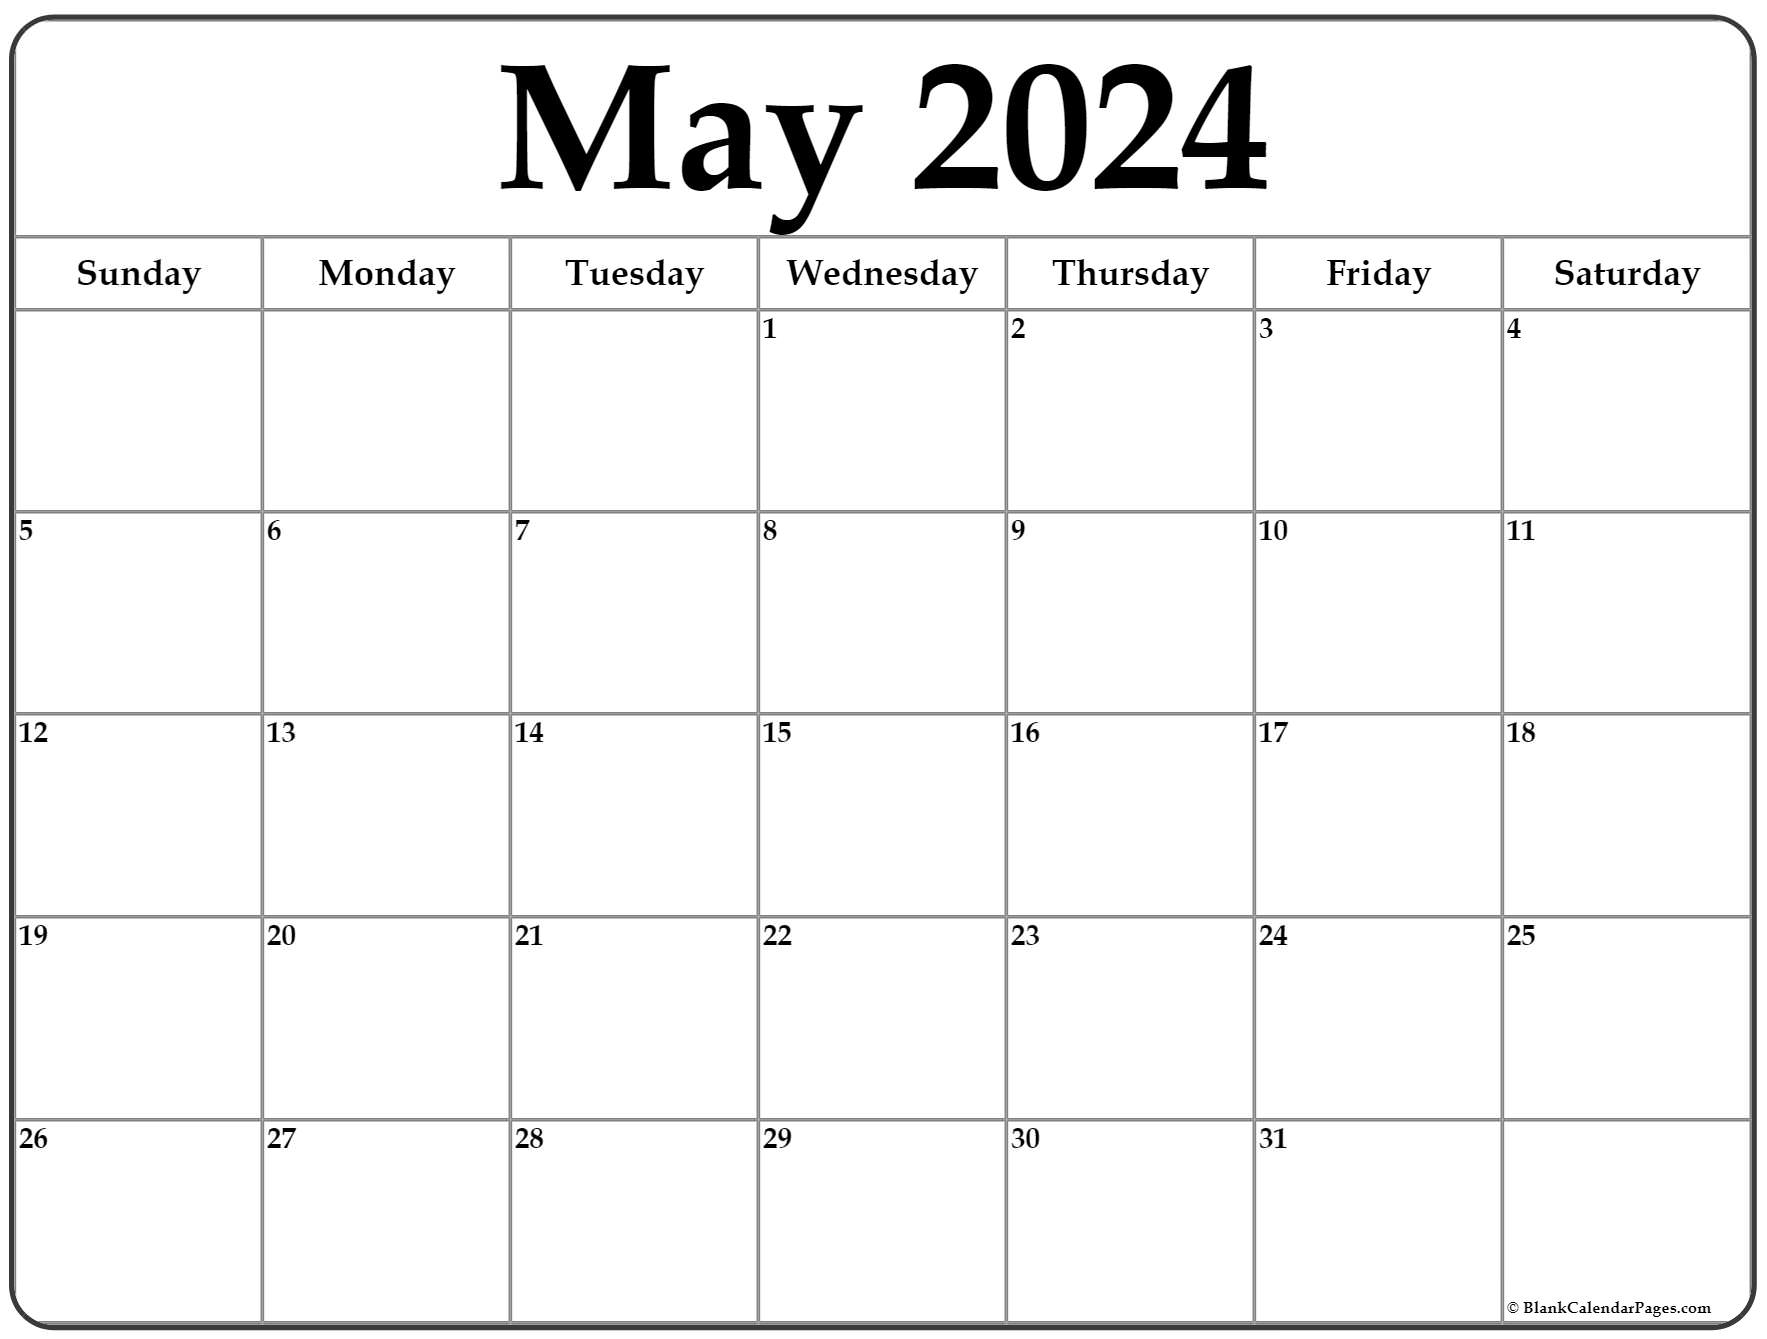 May 2024 Calendar | Free Printable Calendar for Blank May 2024 Calendar Free Printable